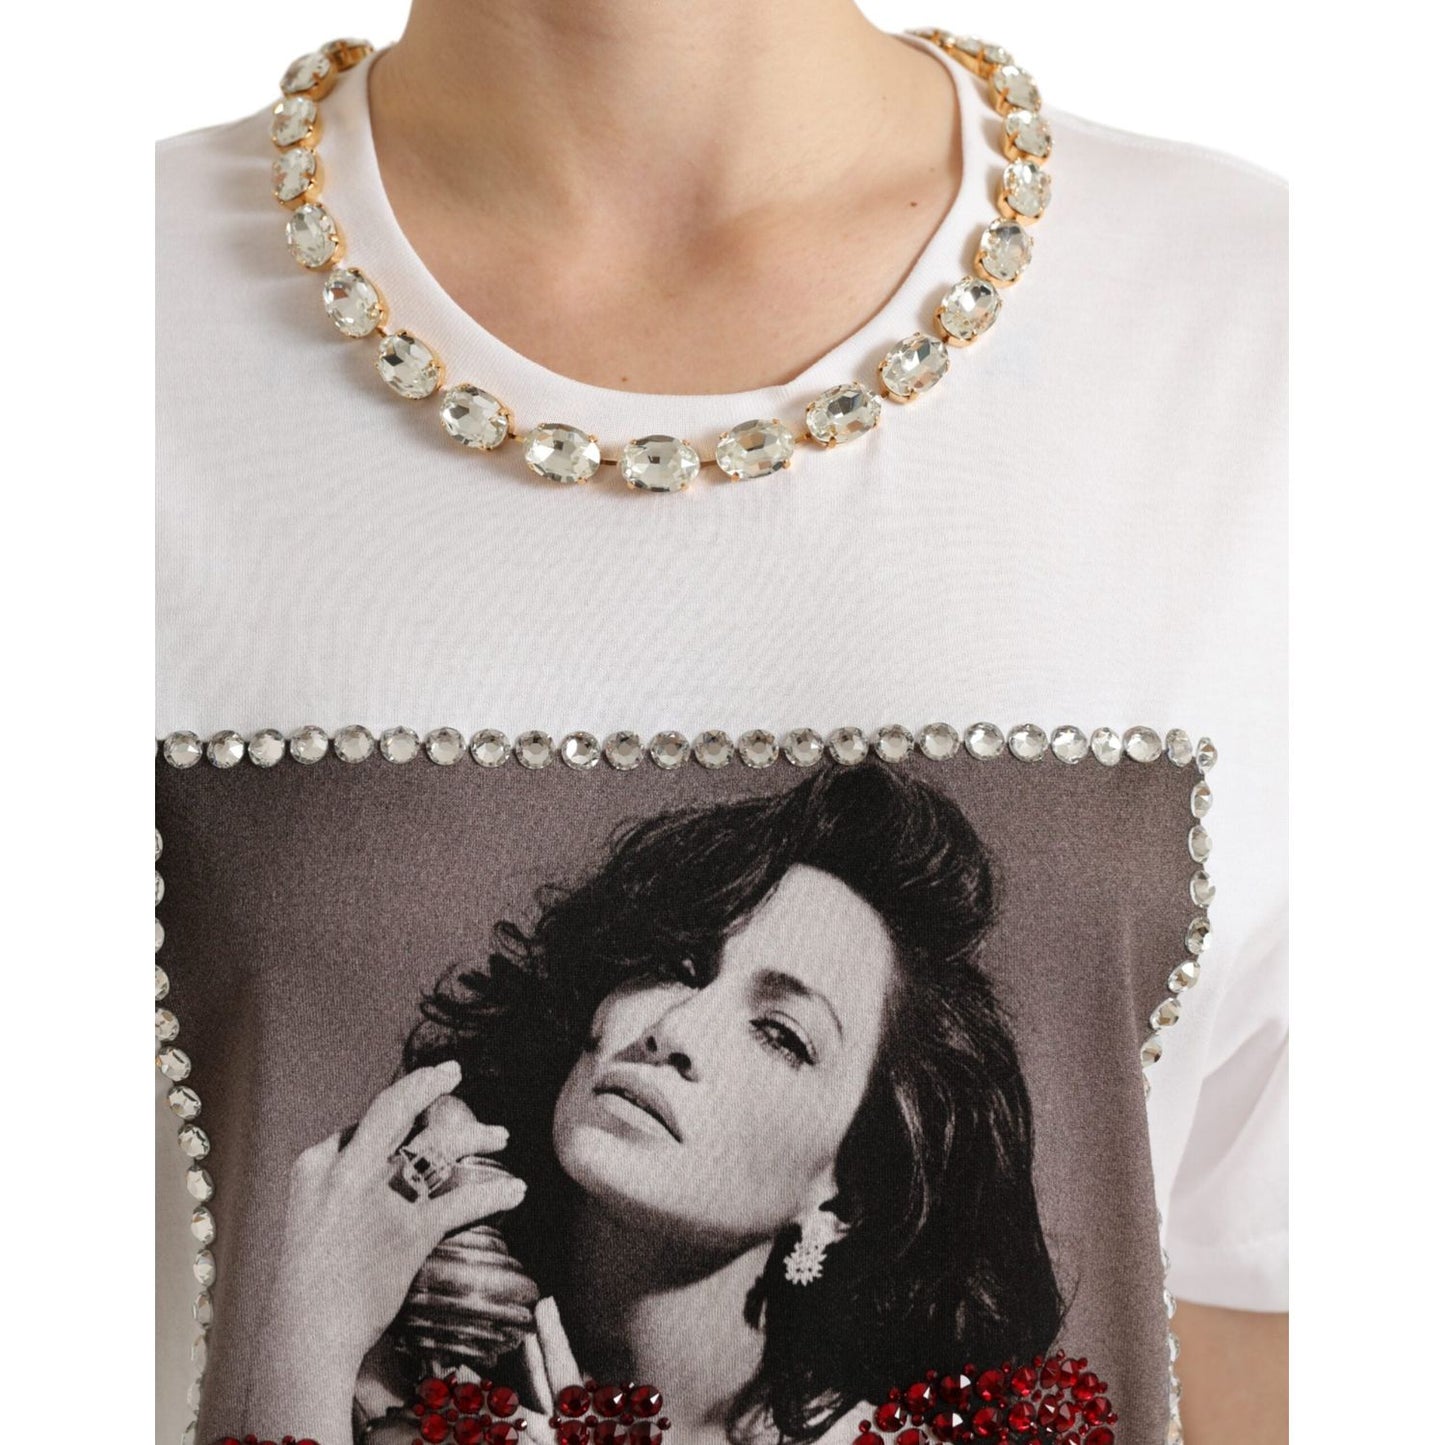 Dolce & Gabbana J.Lo Portrait Crystal Tee – Limited Edition white-crystal-neckline-print-tee-t-shirt